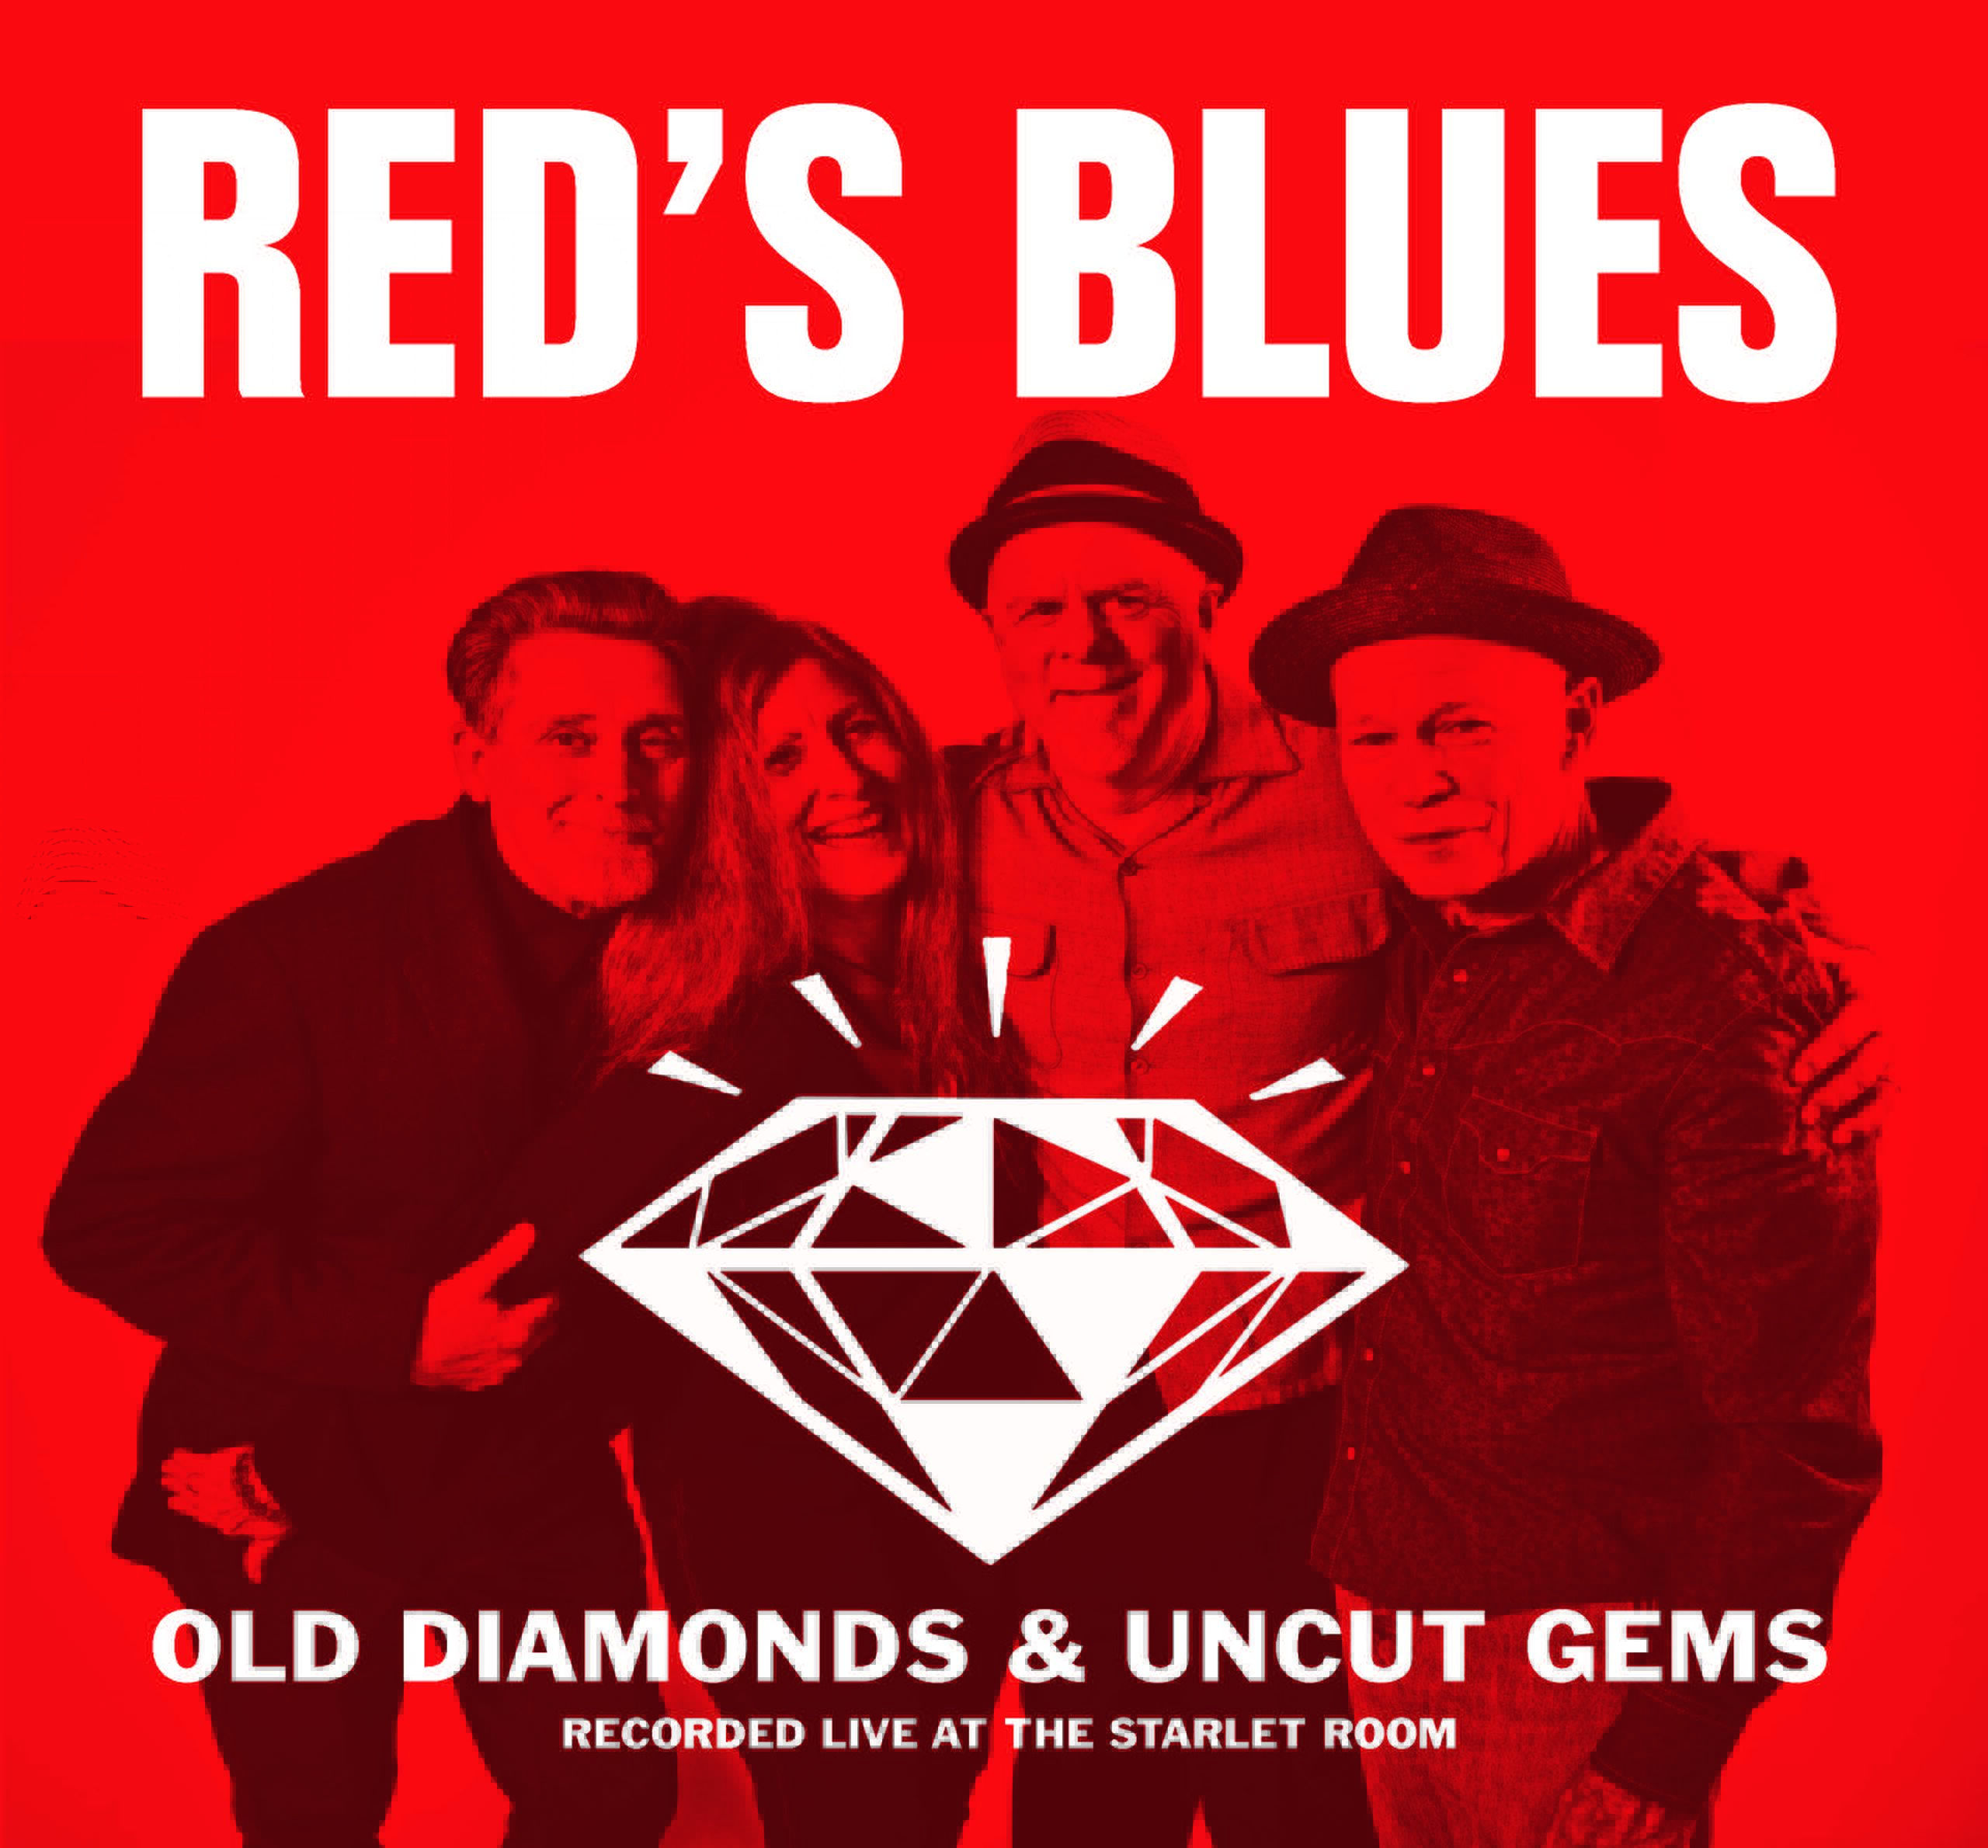 Red’s Blues - Old Diamonds & Uncut Gems